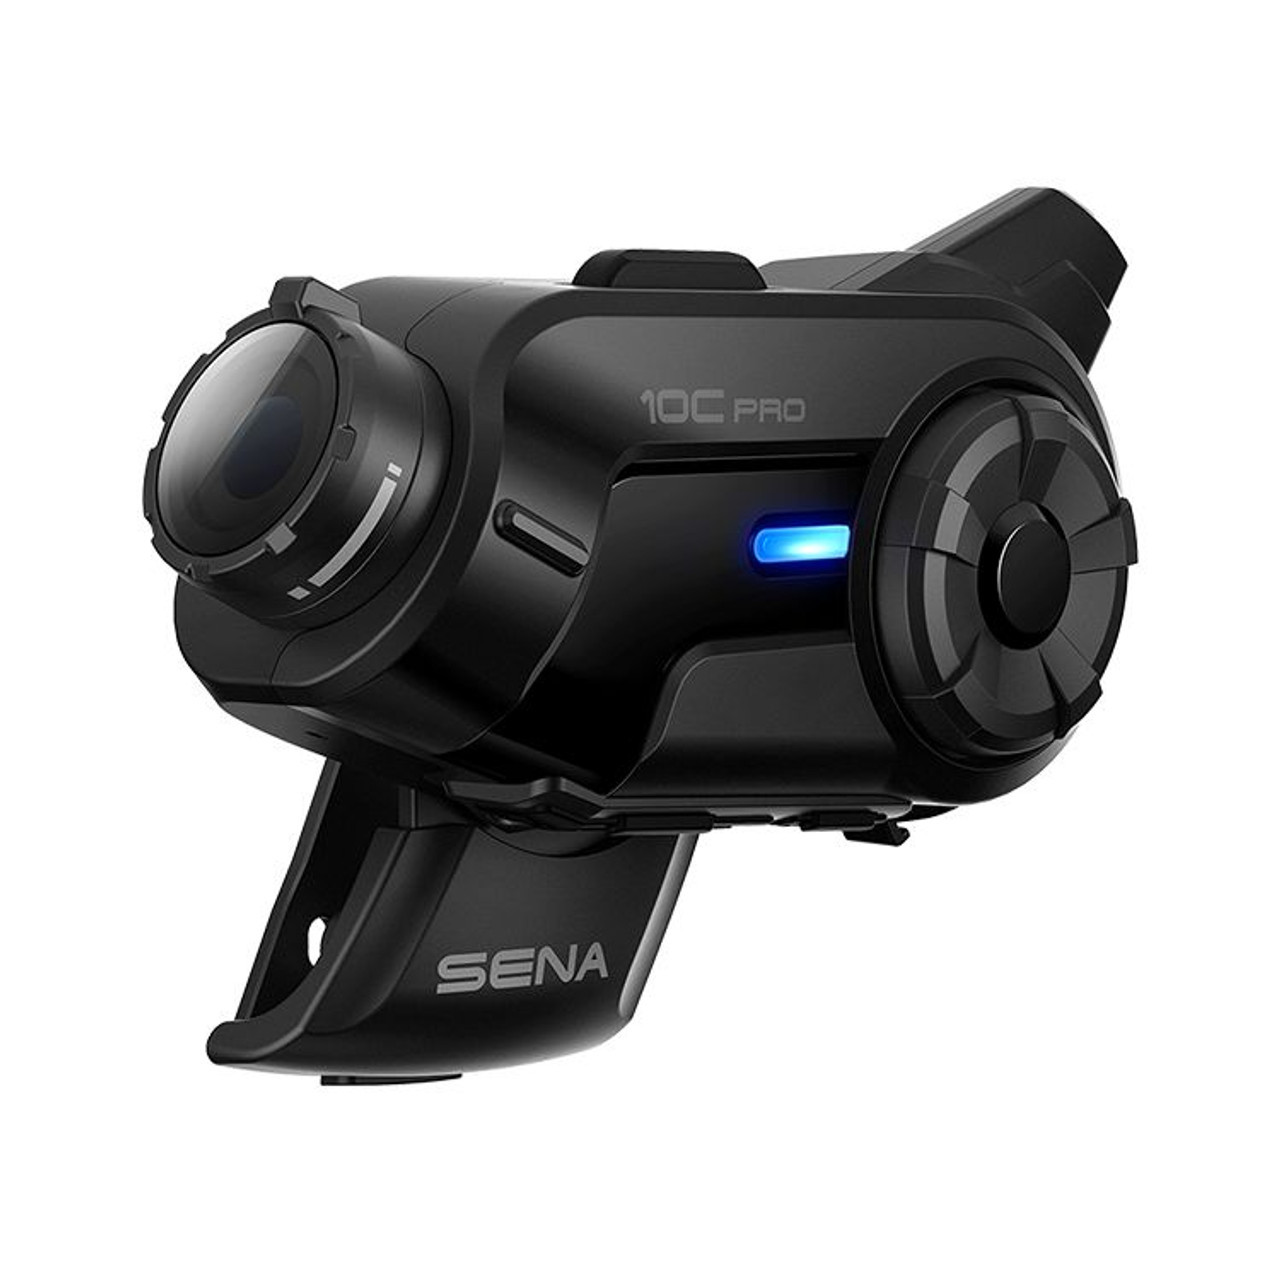 Sena 10C PRO Bluetooth with Camera - WestEndMotorsports.com